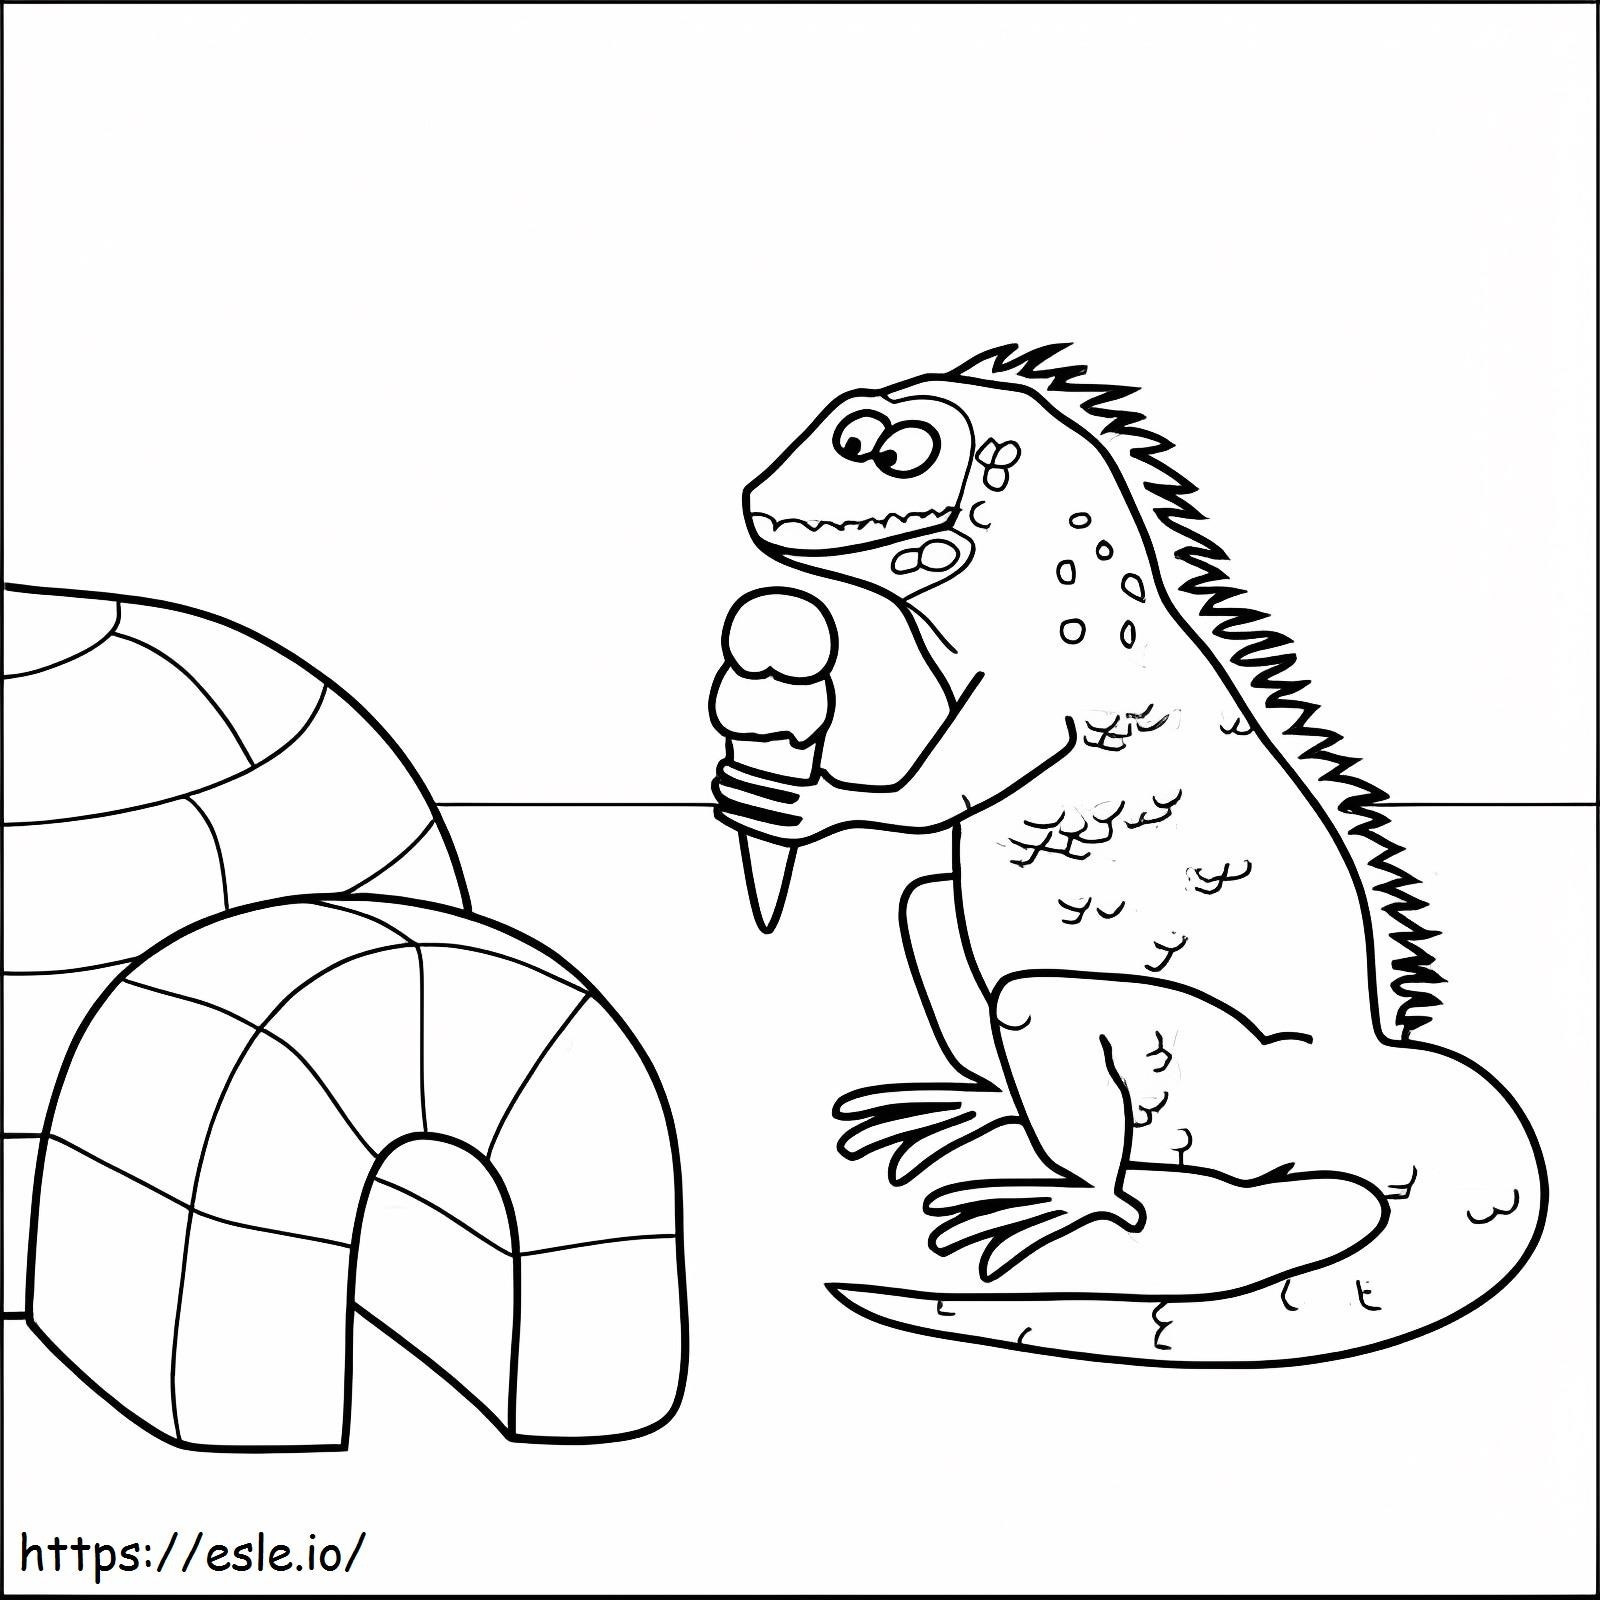 Iguana And Igloo coloring page